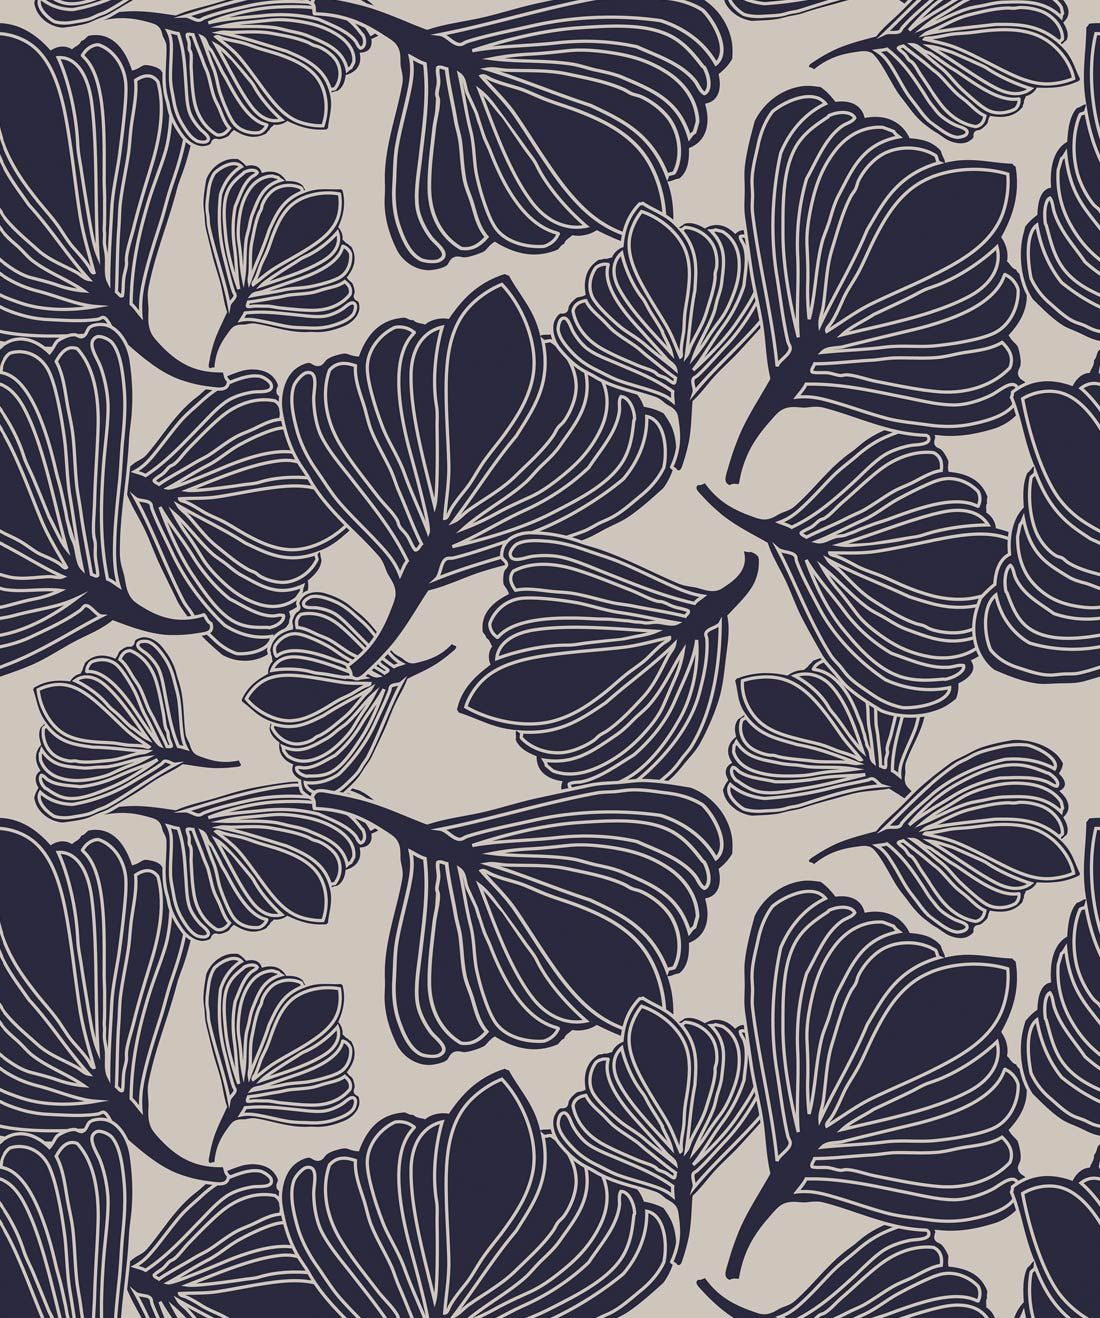 Tulip Seeds is a romantic wallpaper design